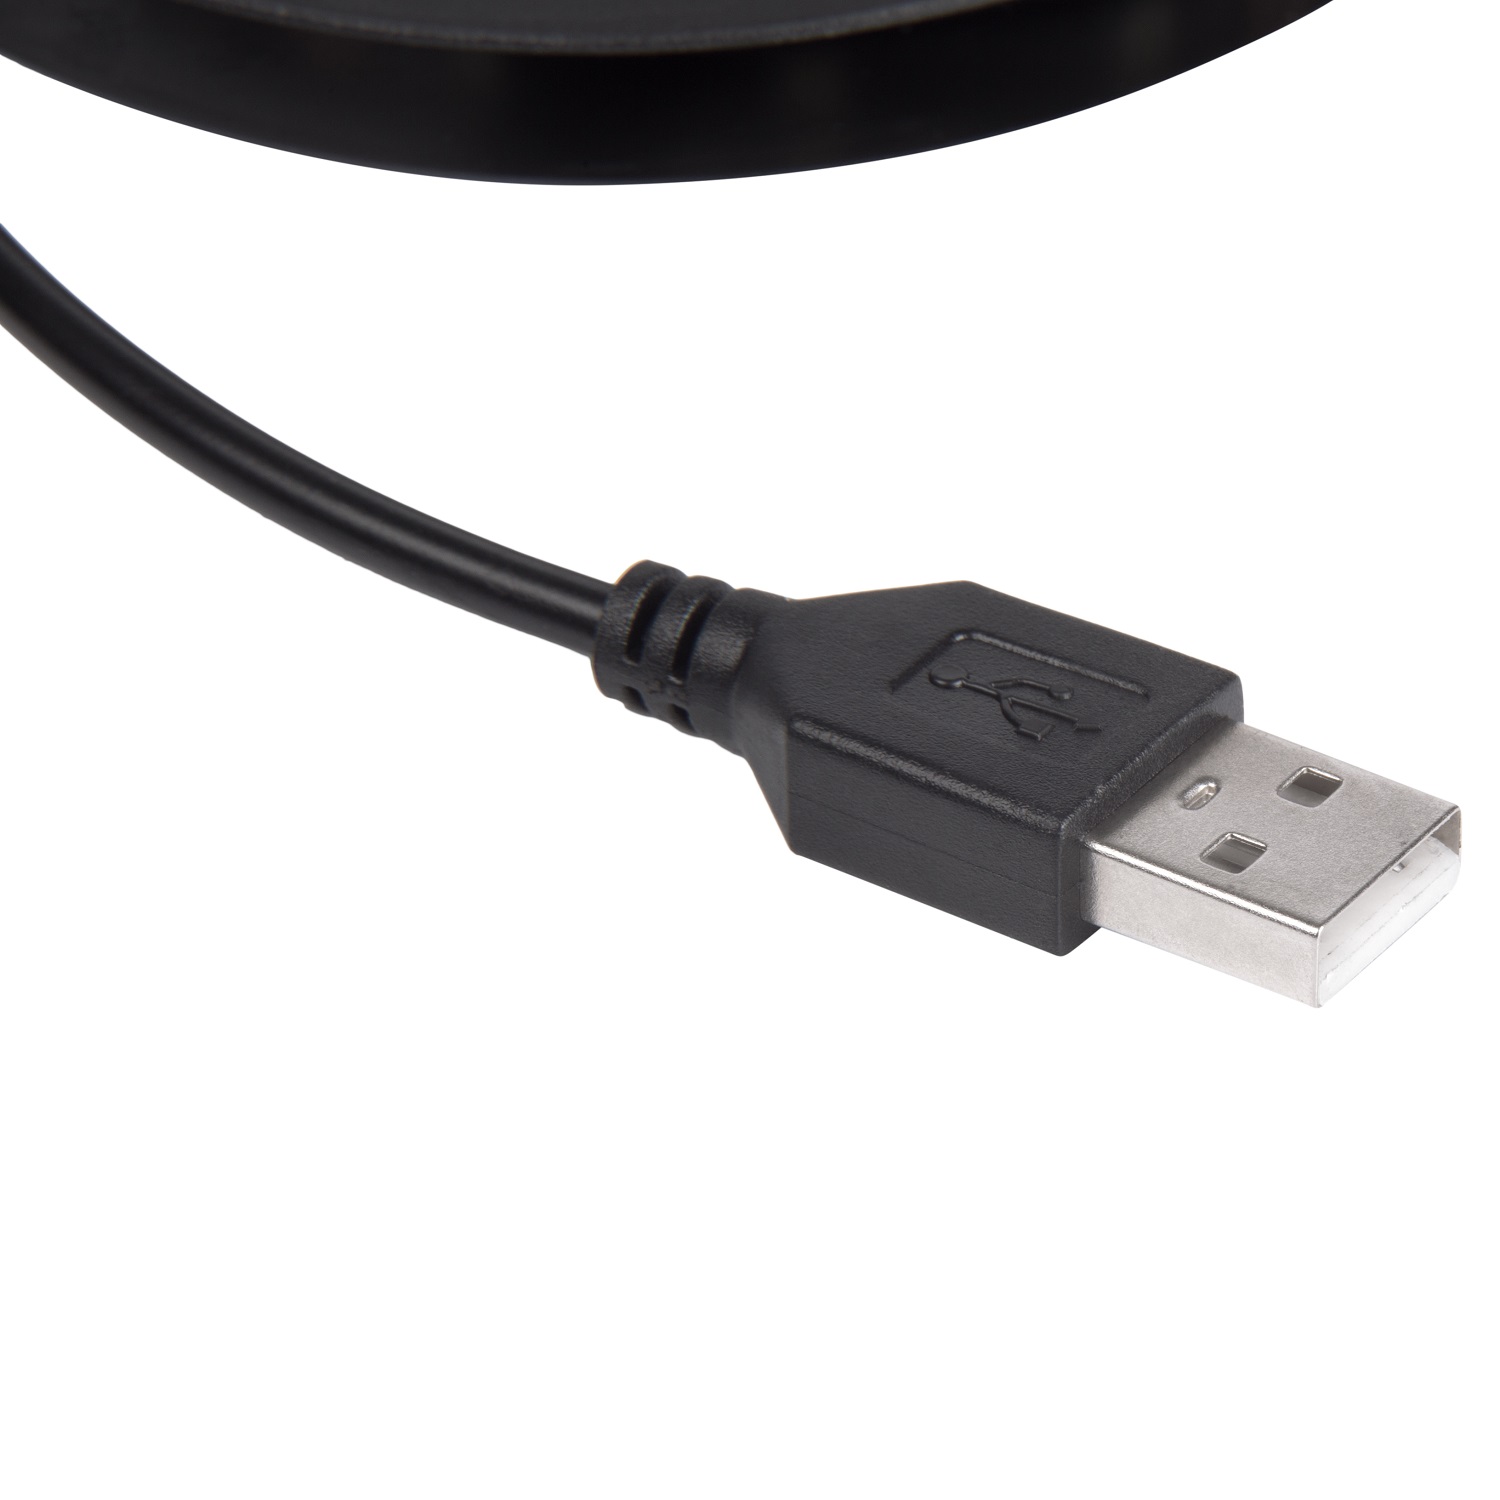 Светодиодная лента LAMPER белая USB с клеевым основанием для подсветки телевизора и компьютера 1 метр - фото 3